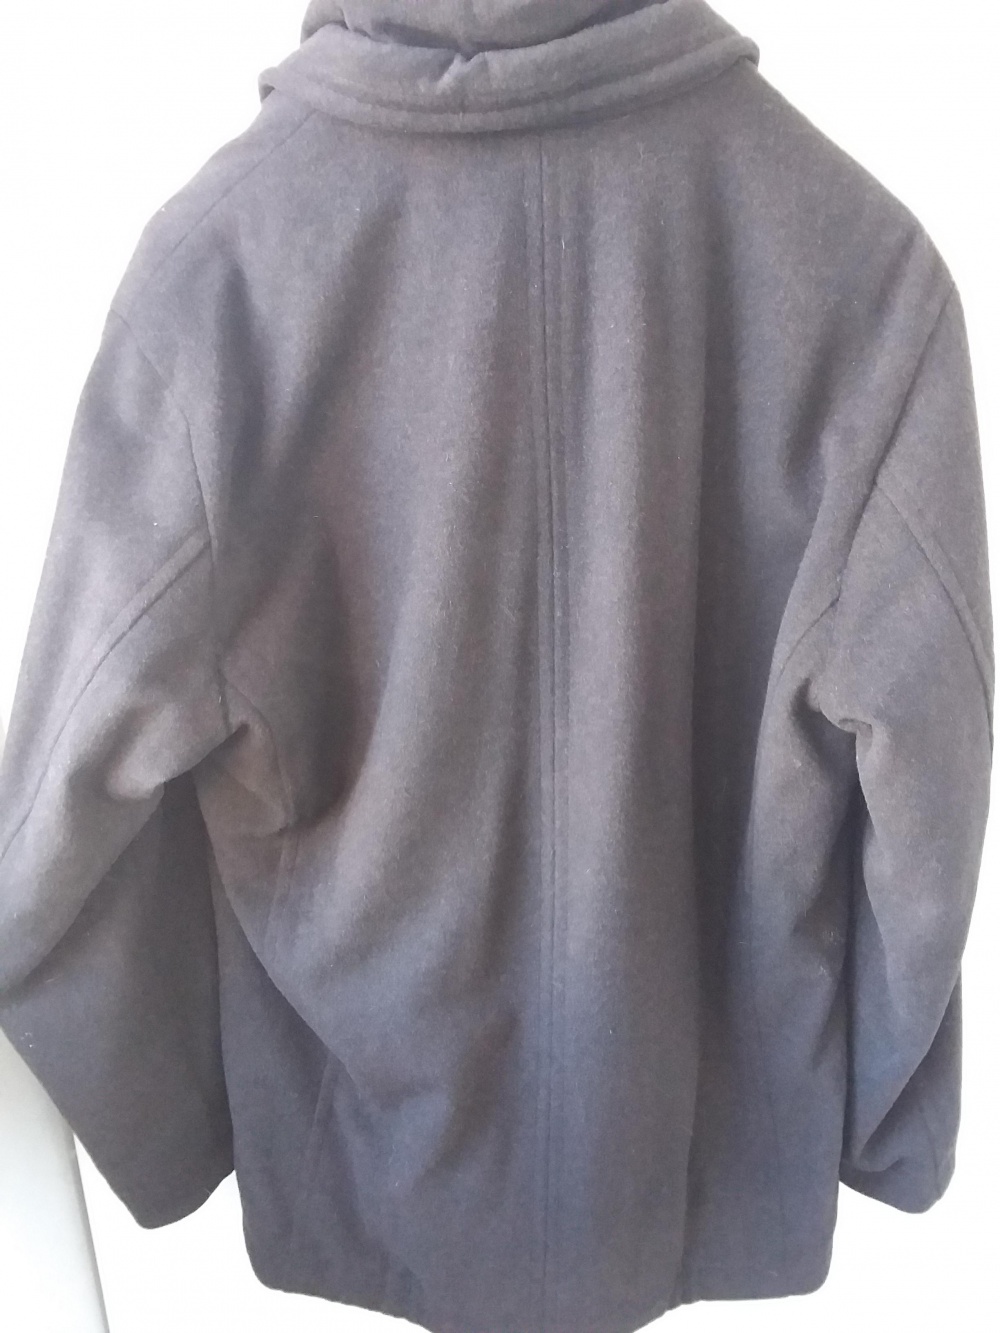 Мужское пальто PIERRE CARDIN на 50-52 размер